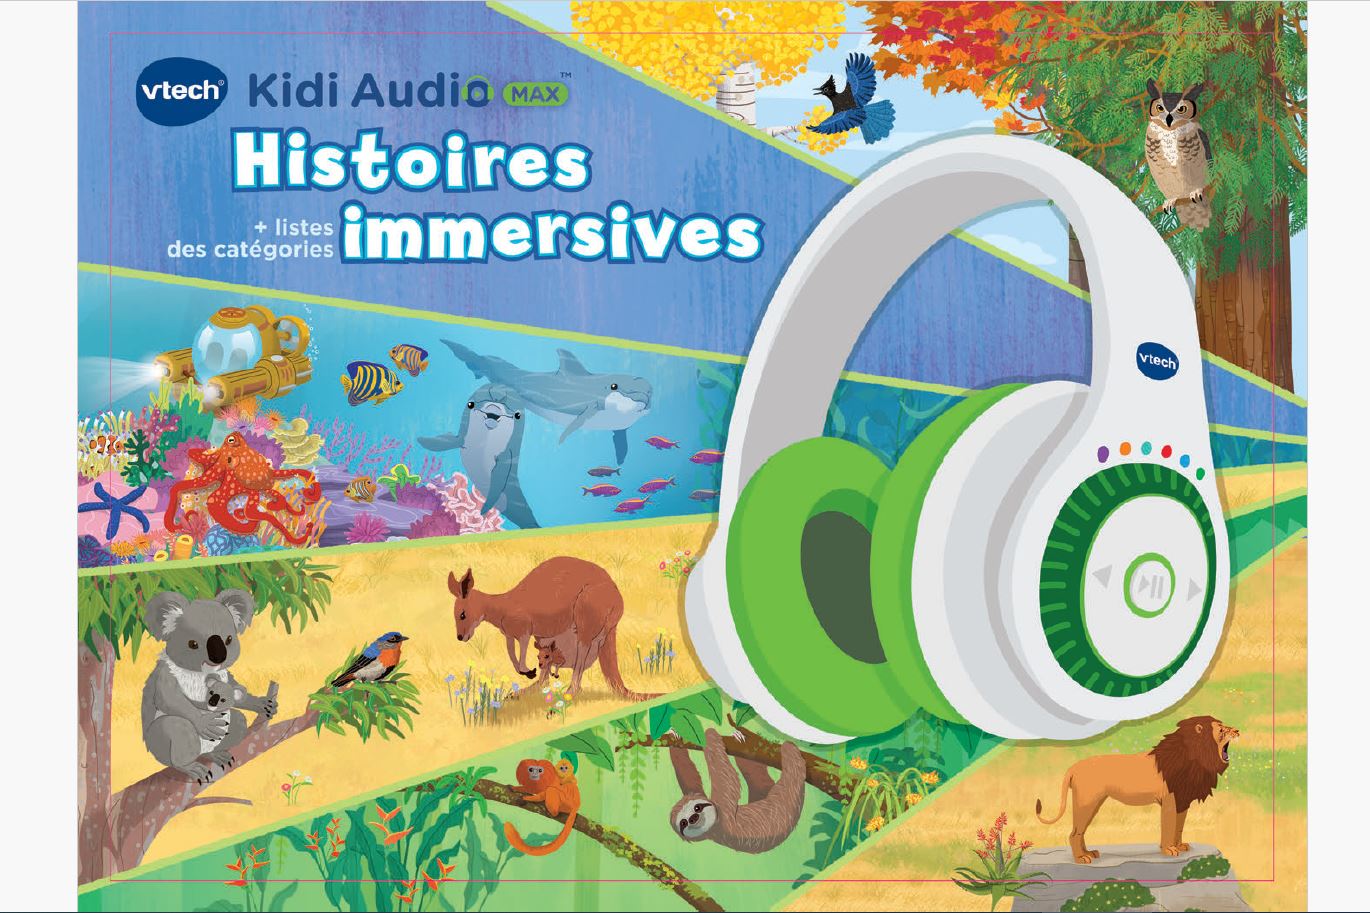 Casque audio et interactif 7 en 1 - Kidi Audio Max VTech : King